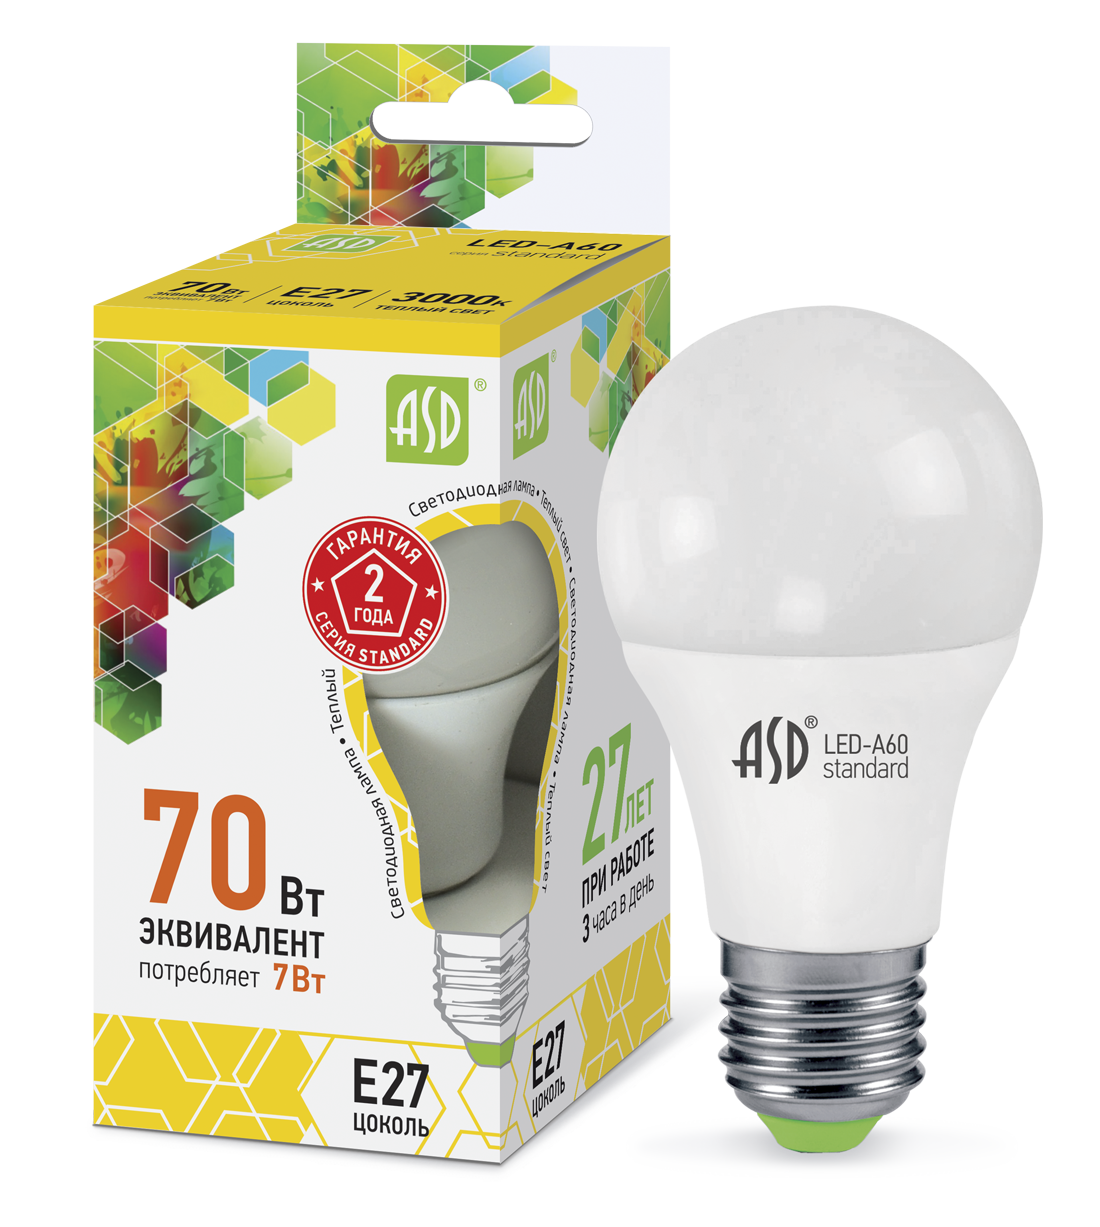 Купить лампа светодиодная led-a60-standard 7вт 230в е27 3000к 630лм asd, 100% качество, в наличии на L-ed.ru